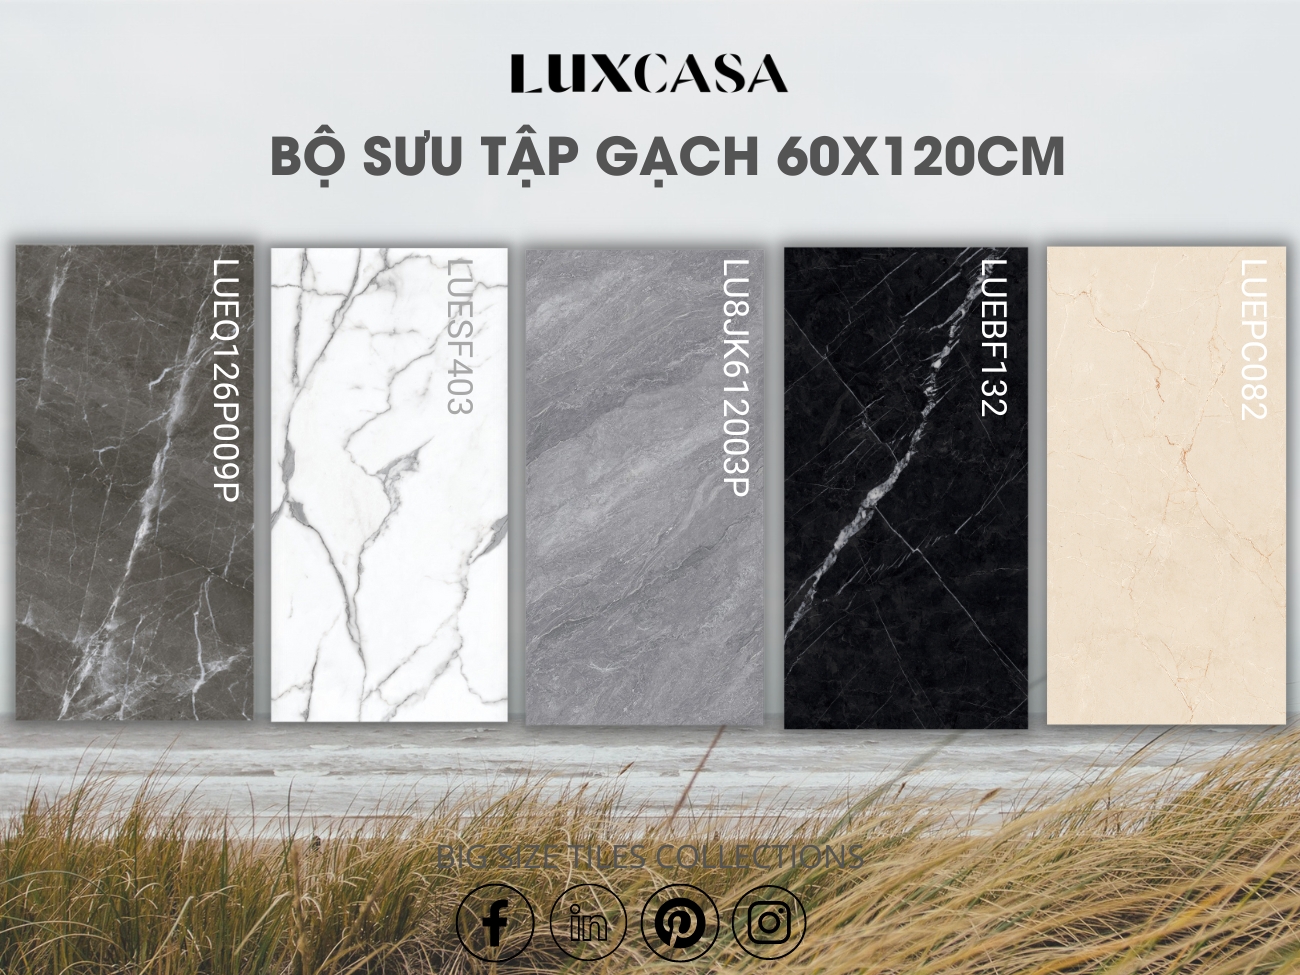 bst gạch giả đá 60x120 đẹp tại Luxcasa